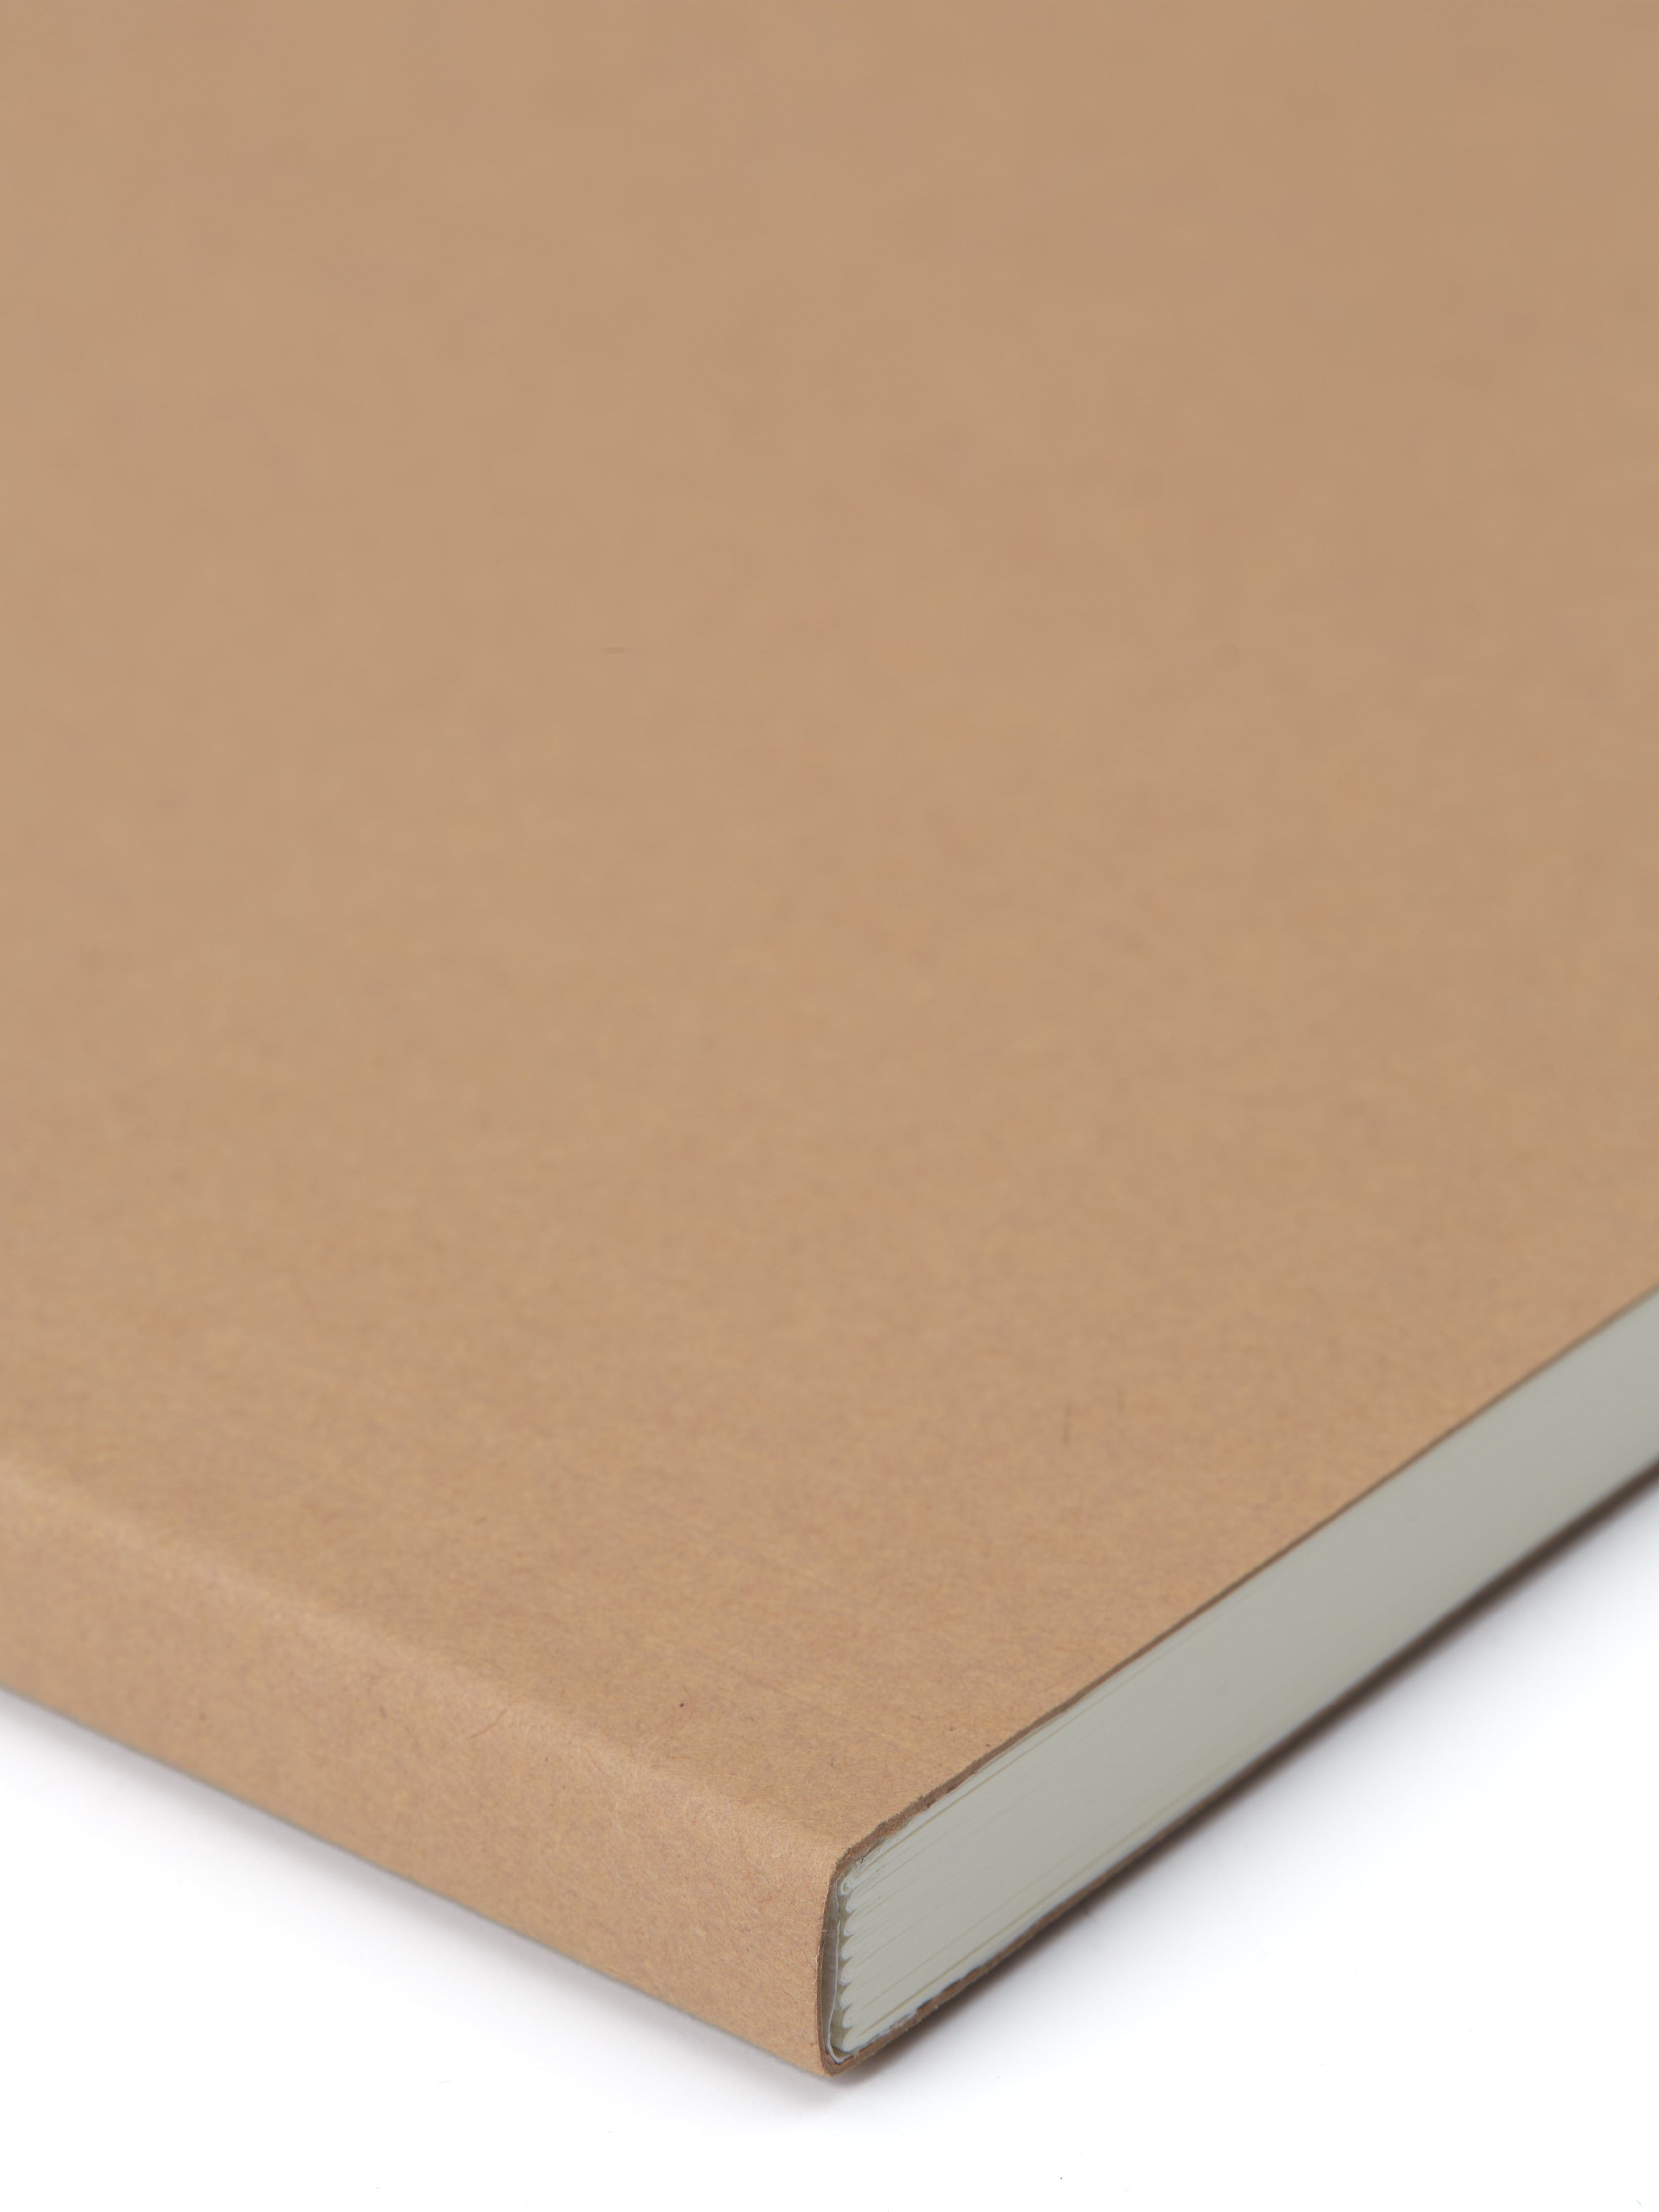 Mark + Fold Everyday Notebook Sand Plain